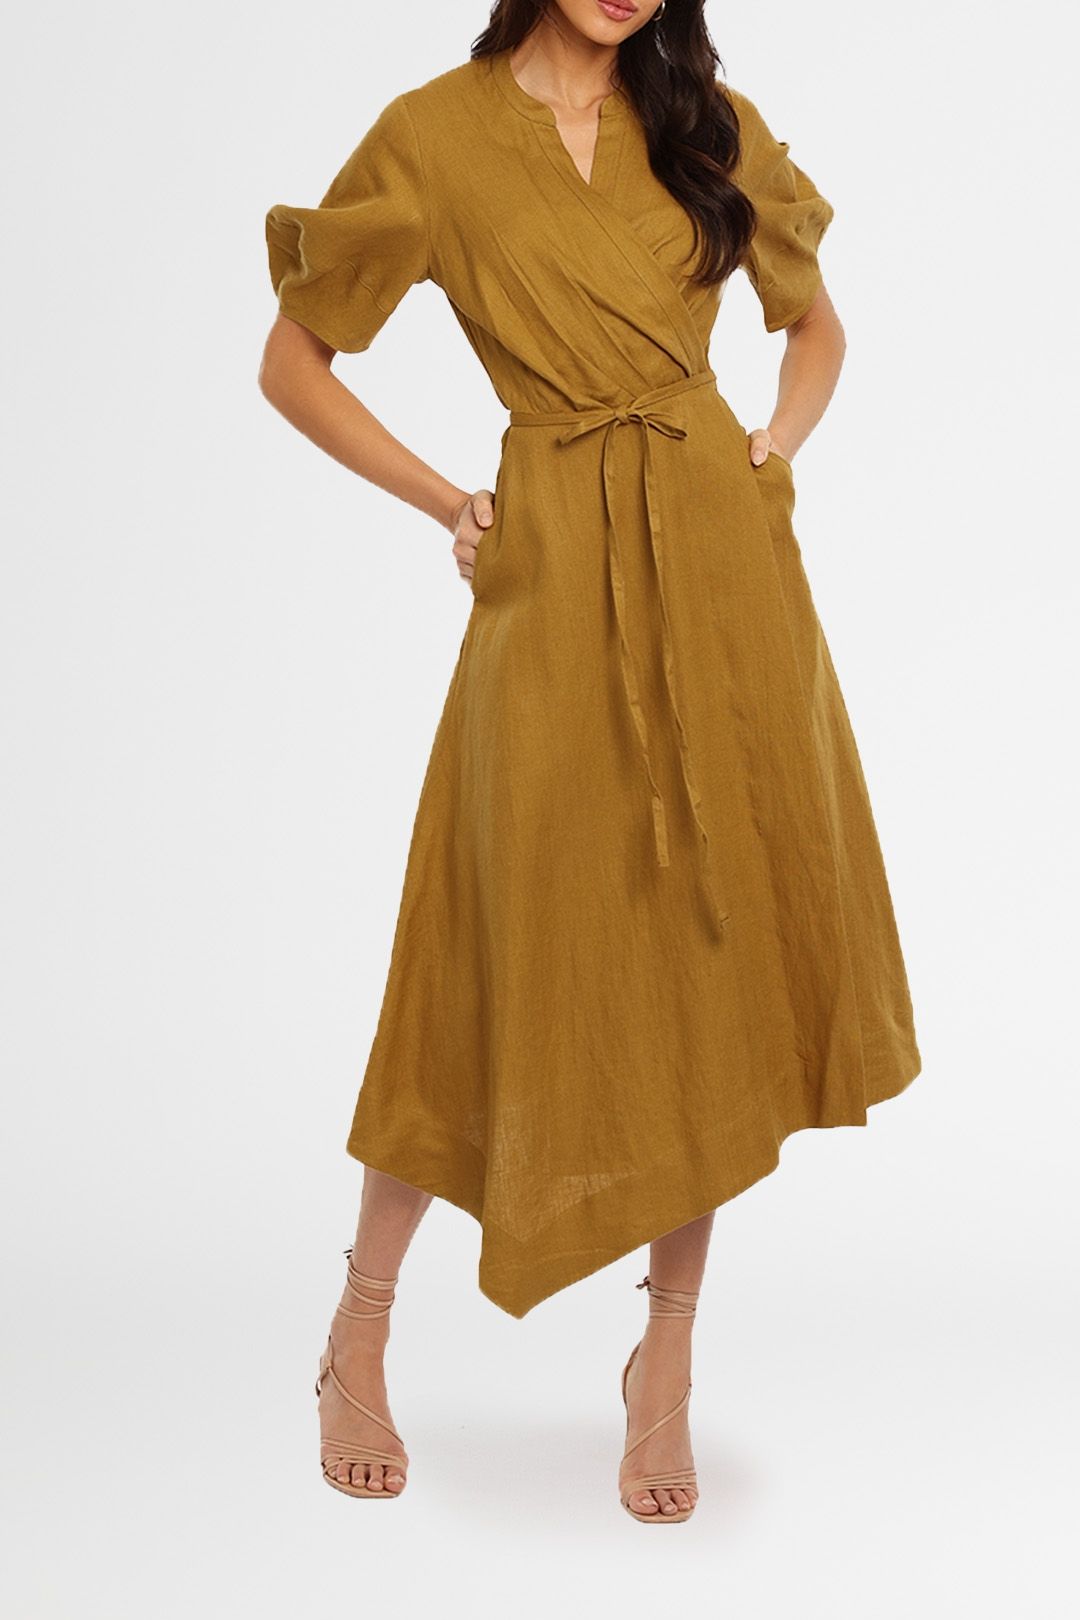 Lara Satin Dress  Satin dresses, Midi length skirts, Dress